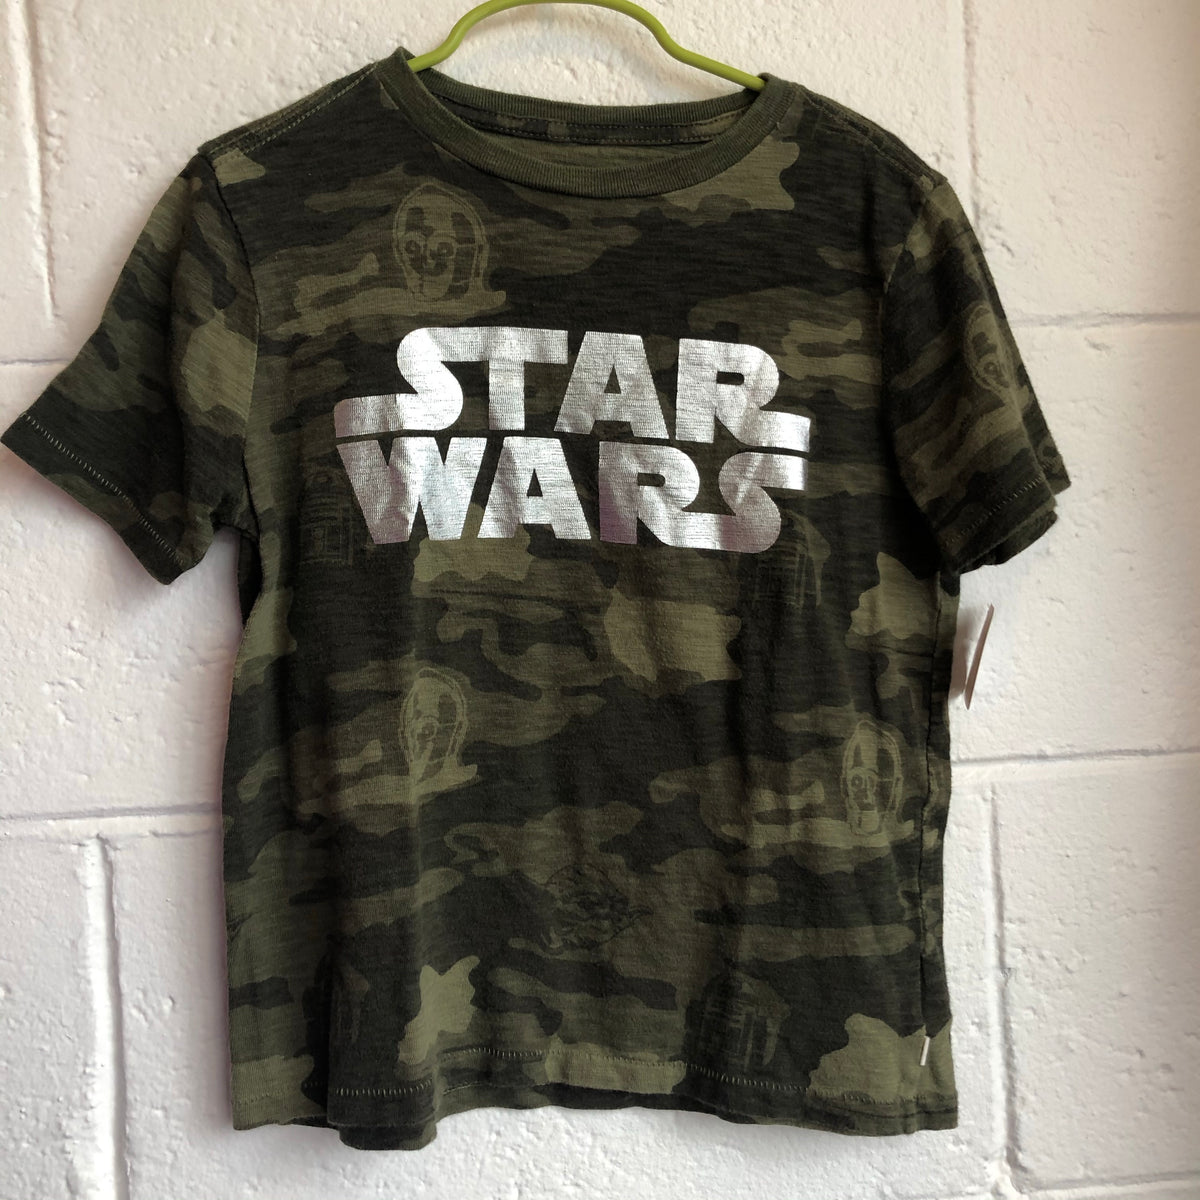 gap star wars shirt